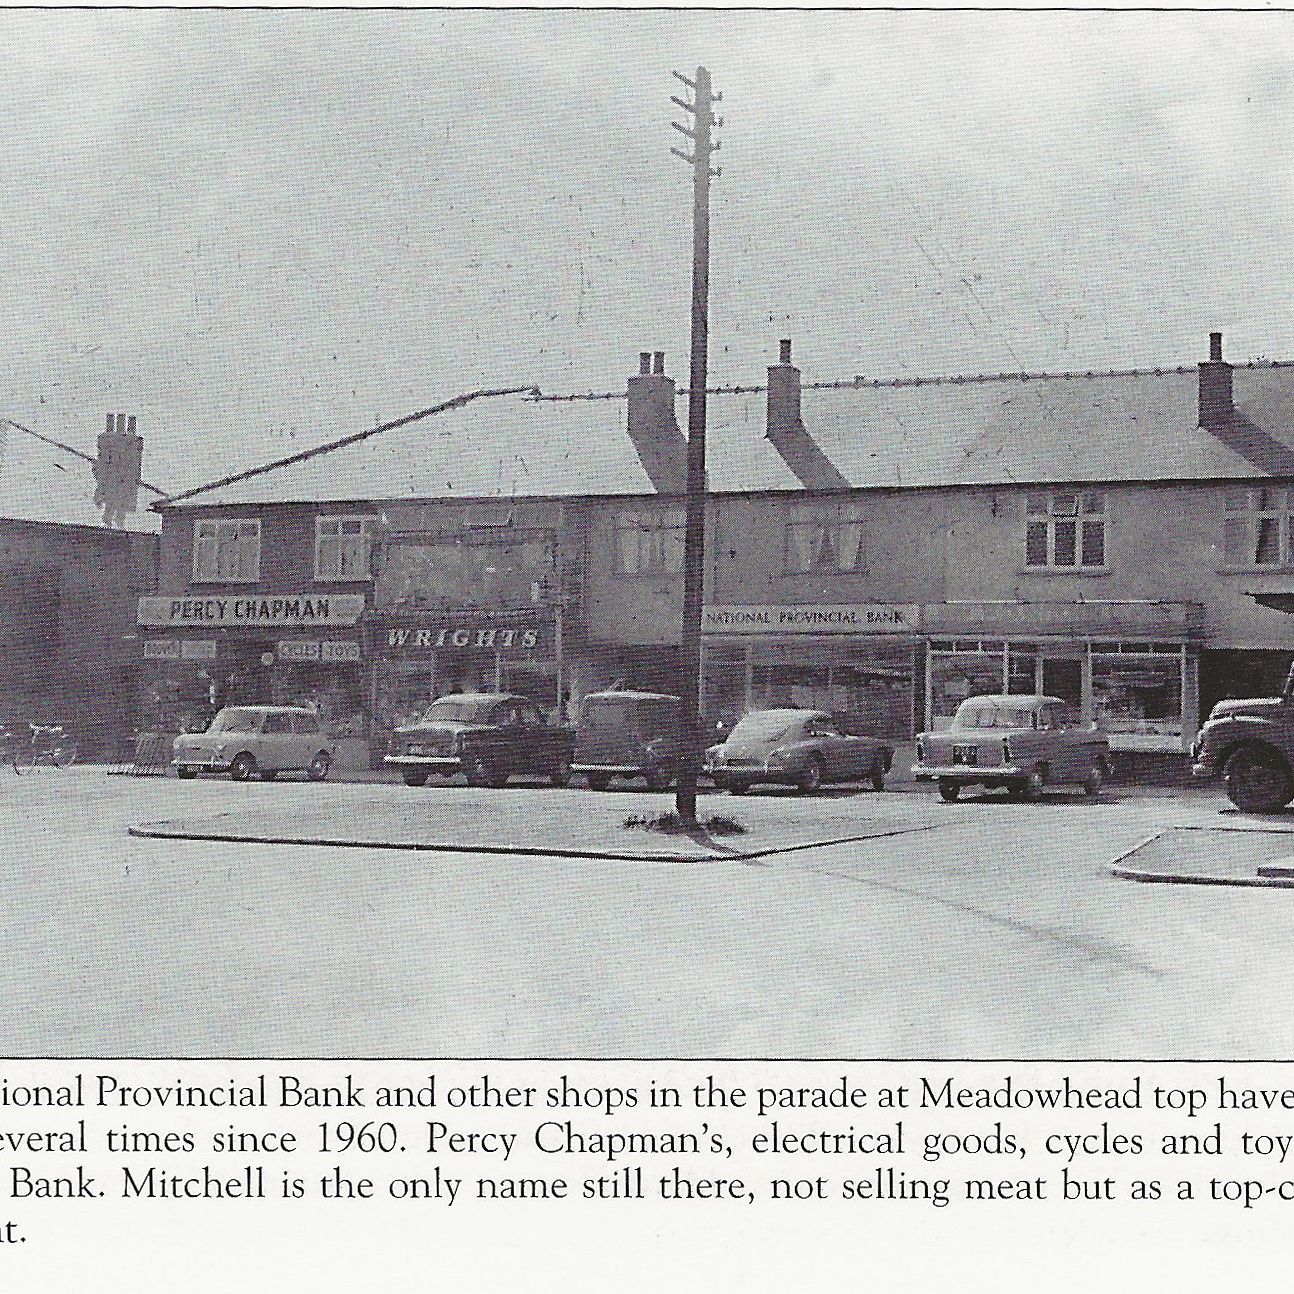 Meadowhead Shops 1960